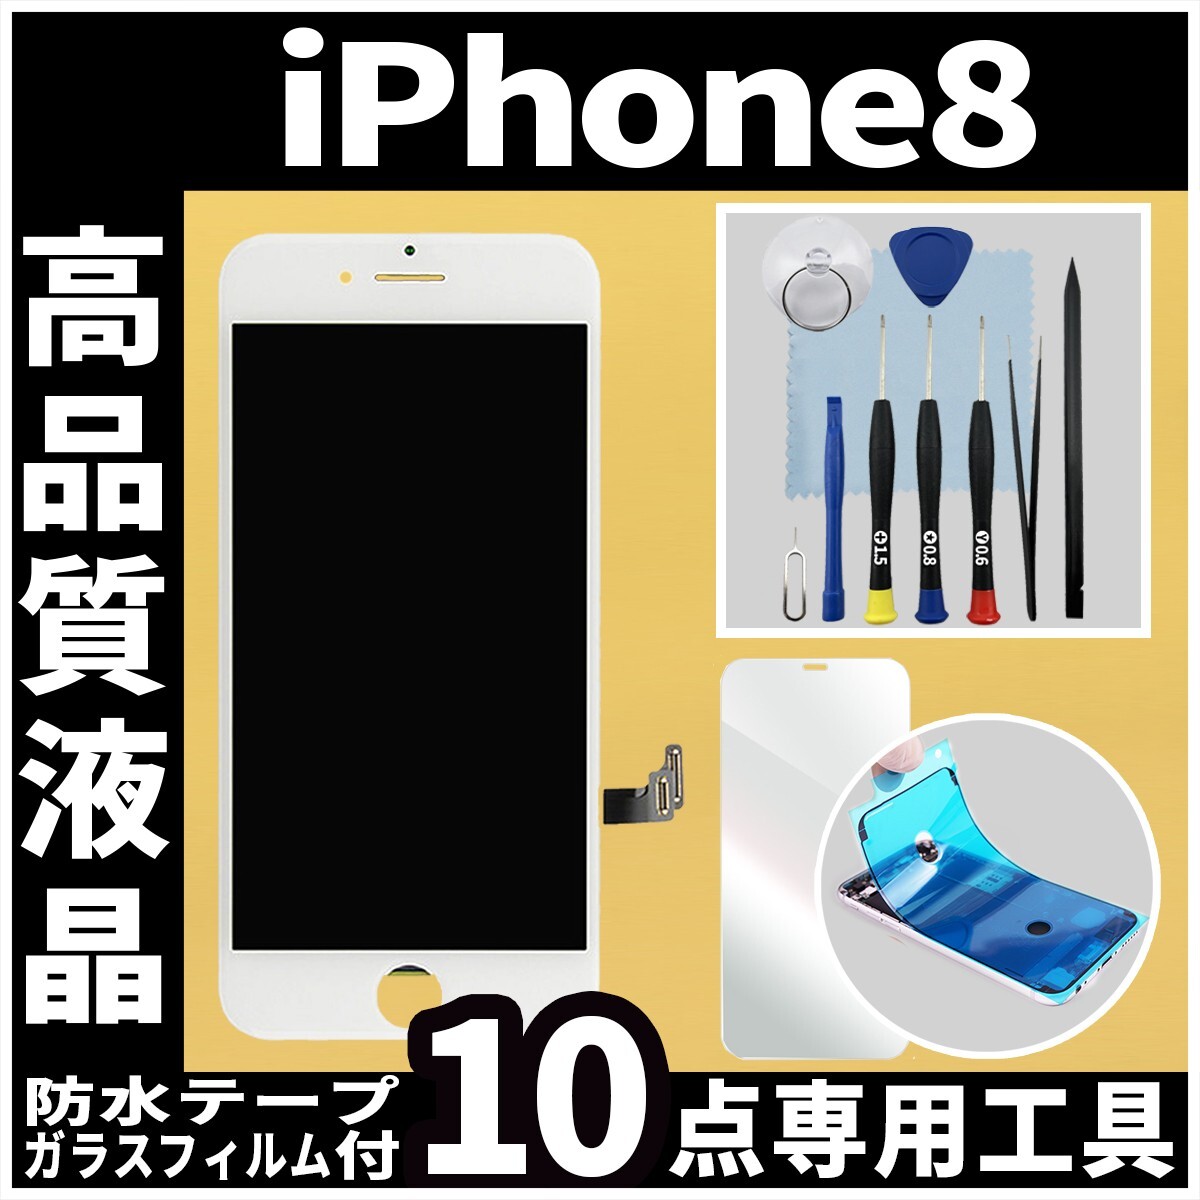 iPhone8 高品質液晶 フロントパネル 白 高品質AAA 互換品 LCD 業者 画面割れ 液晶 iphone 修理 ガラス割れ 交換 防水テープ タッチ_画像1